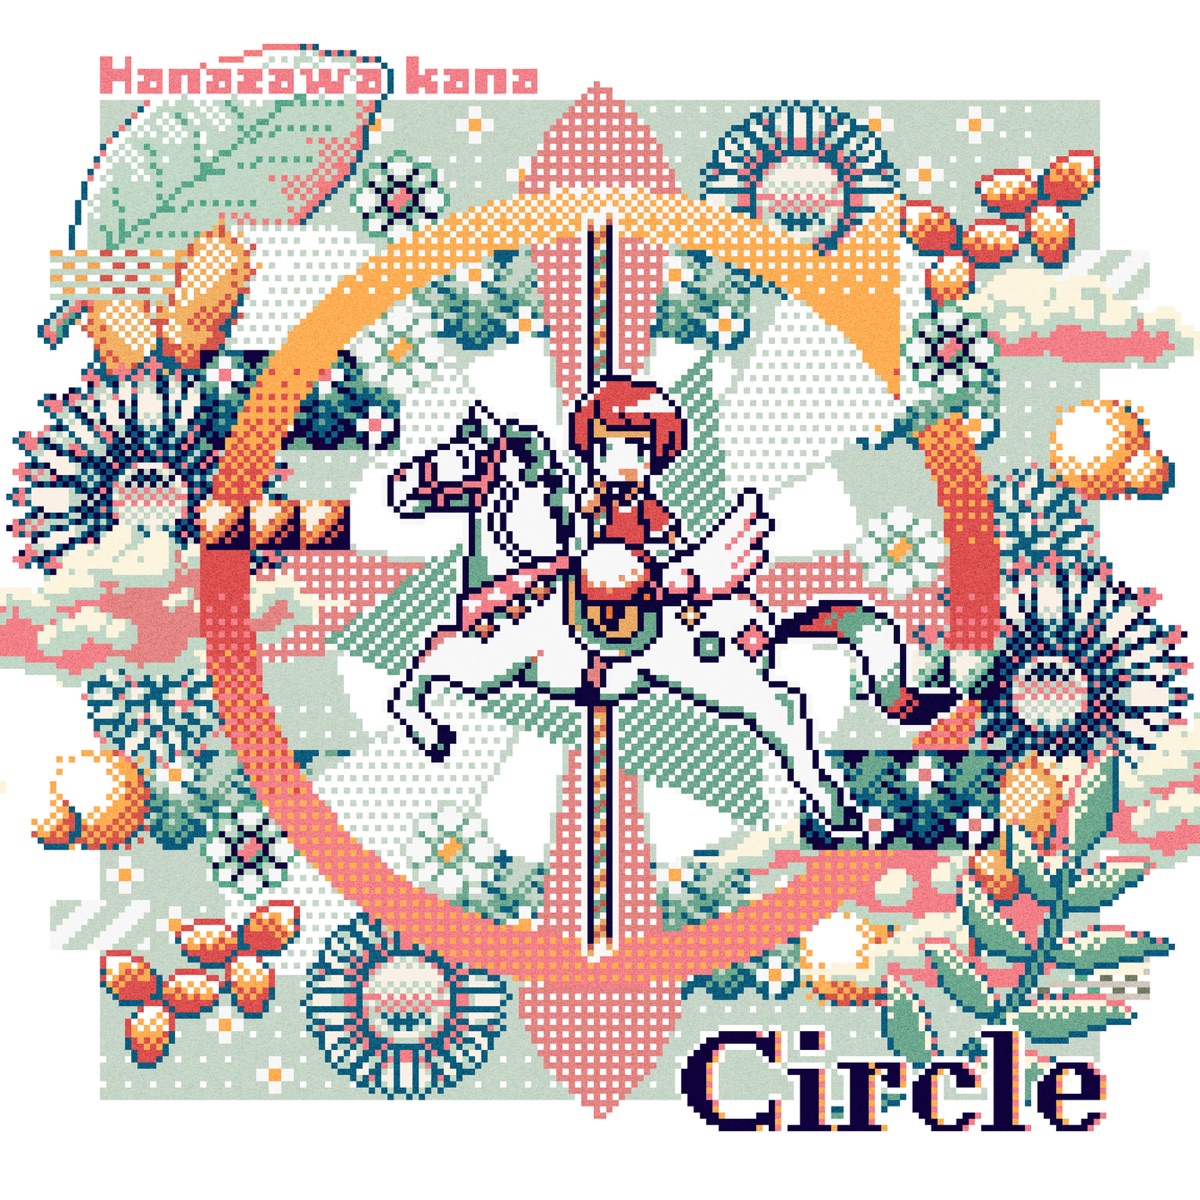 Cover art for『Kana Hanazawa - Circle』from the release『Circle